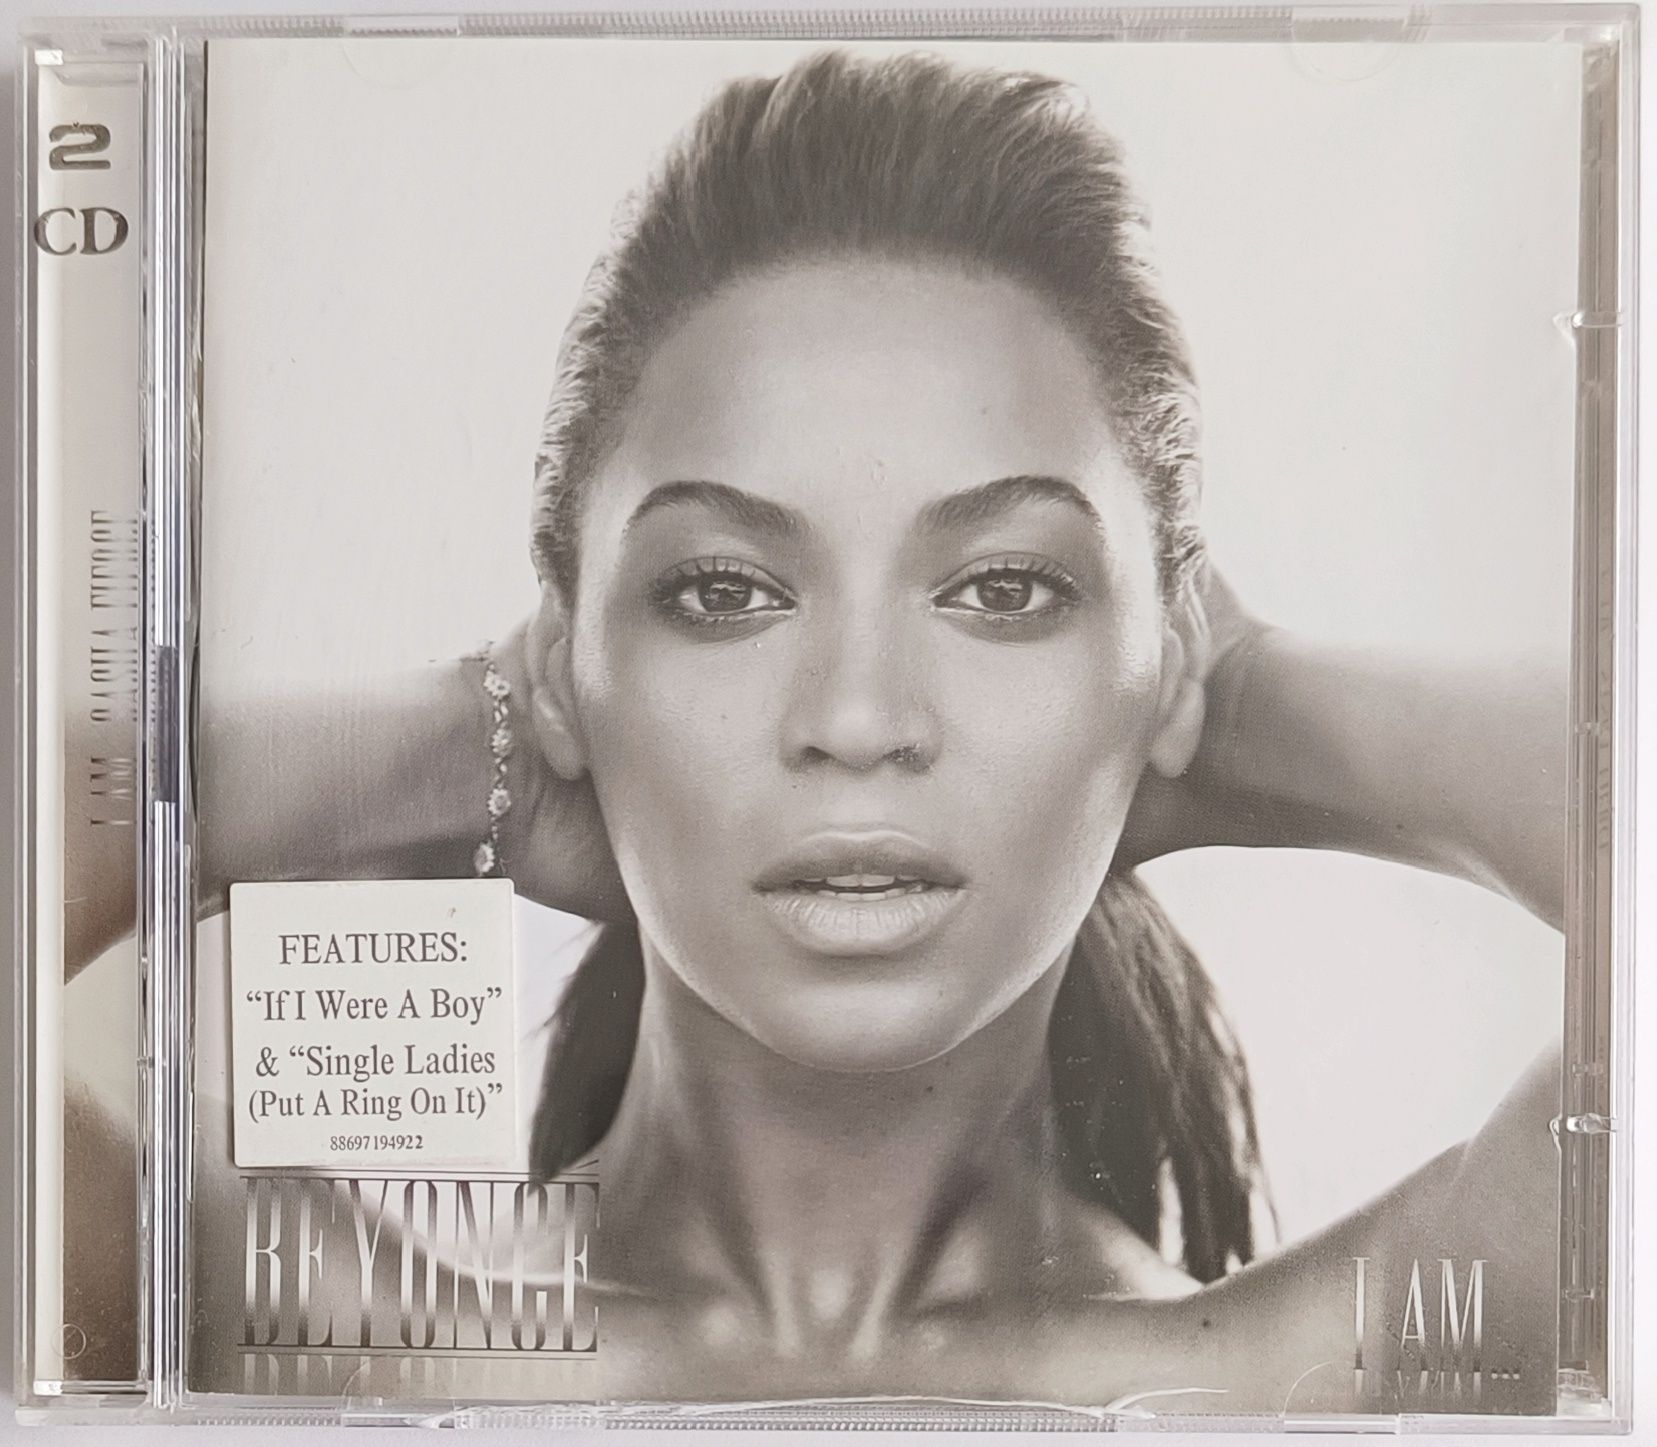 Beyonce I AM Sasha Fierce 2CD 2008r